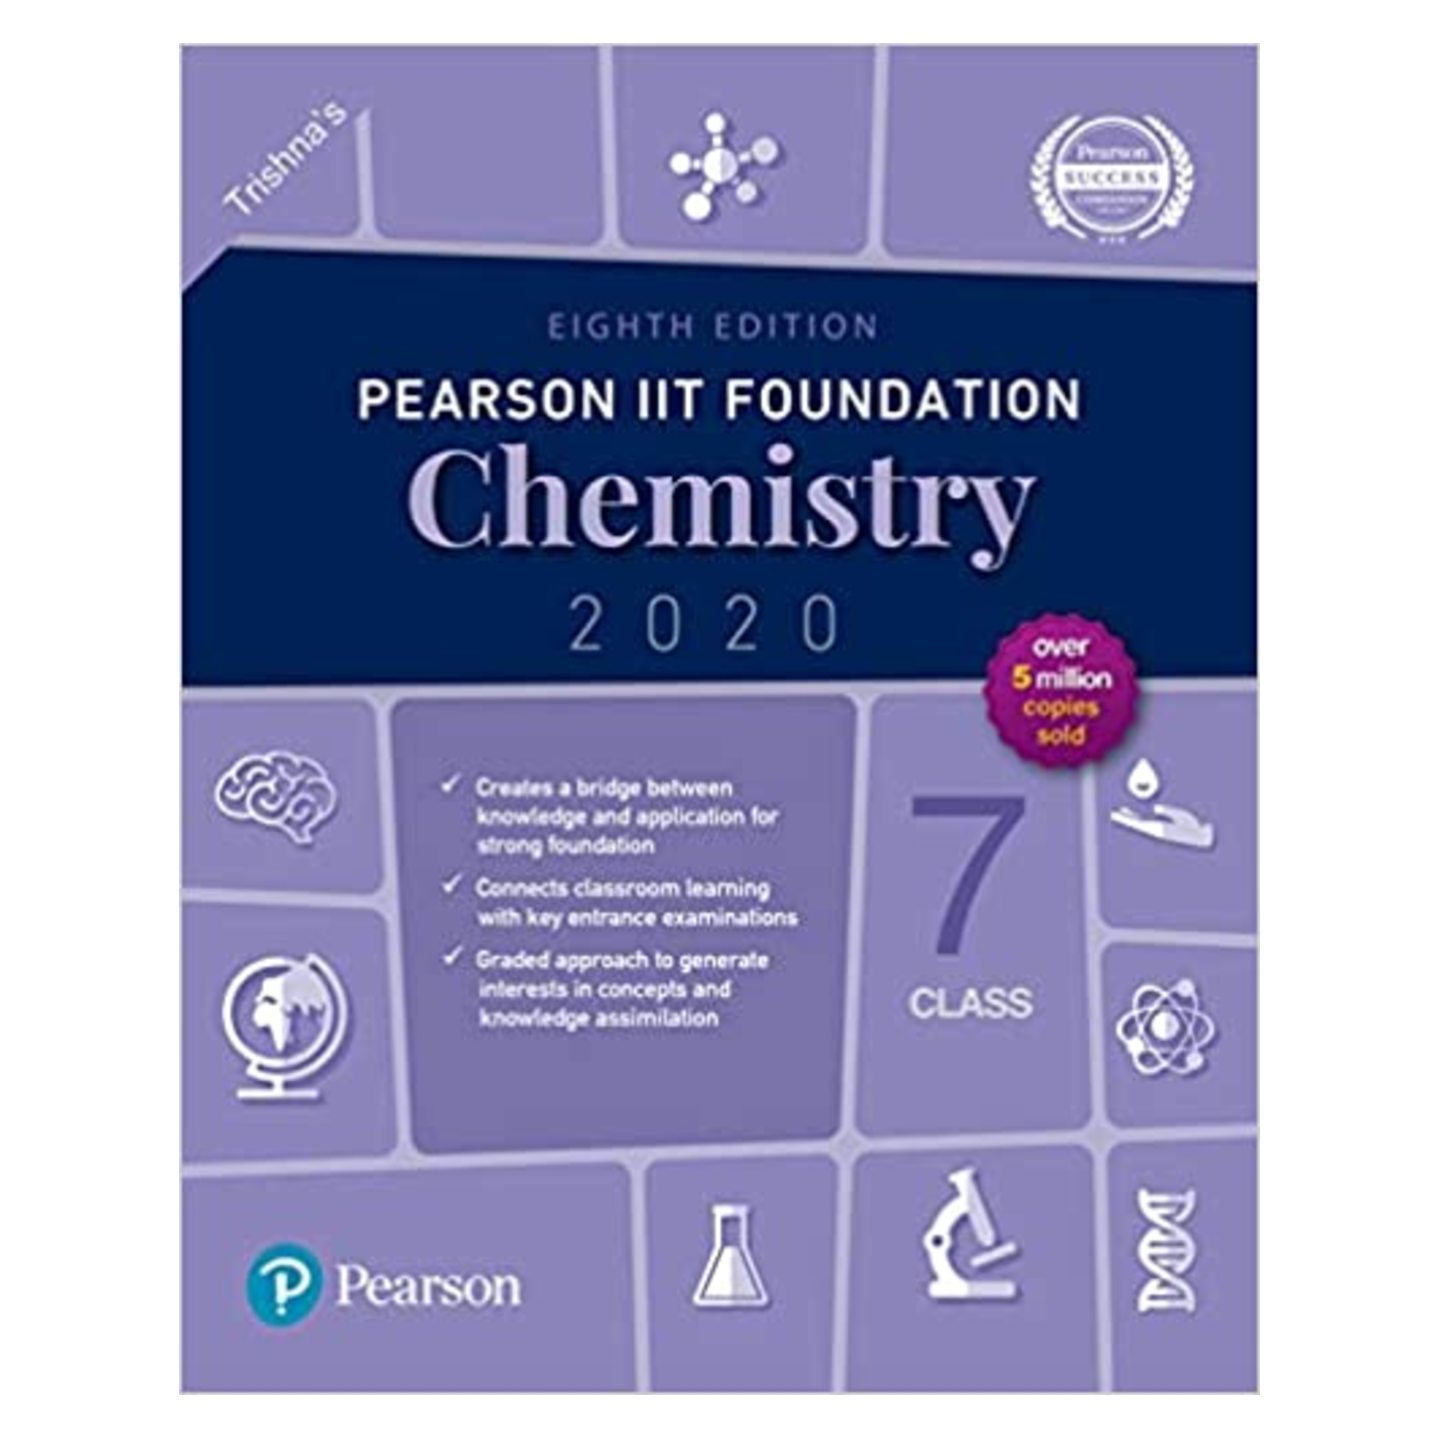 Pearson IIT Foundation Series Class 7 Chemistry